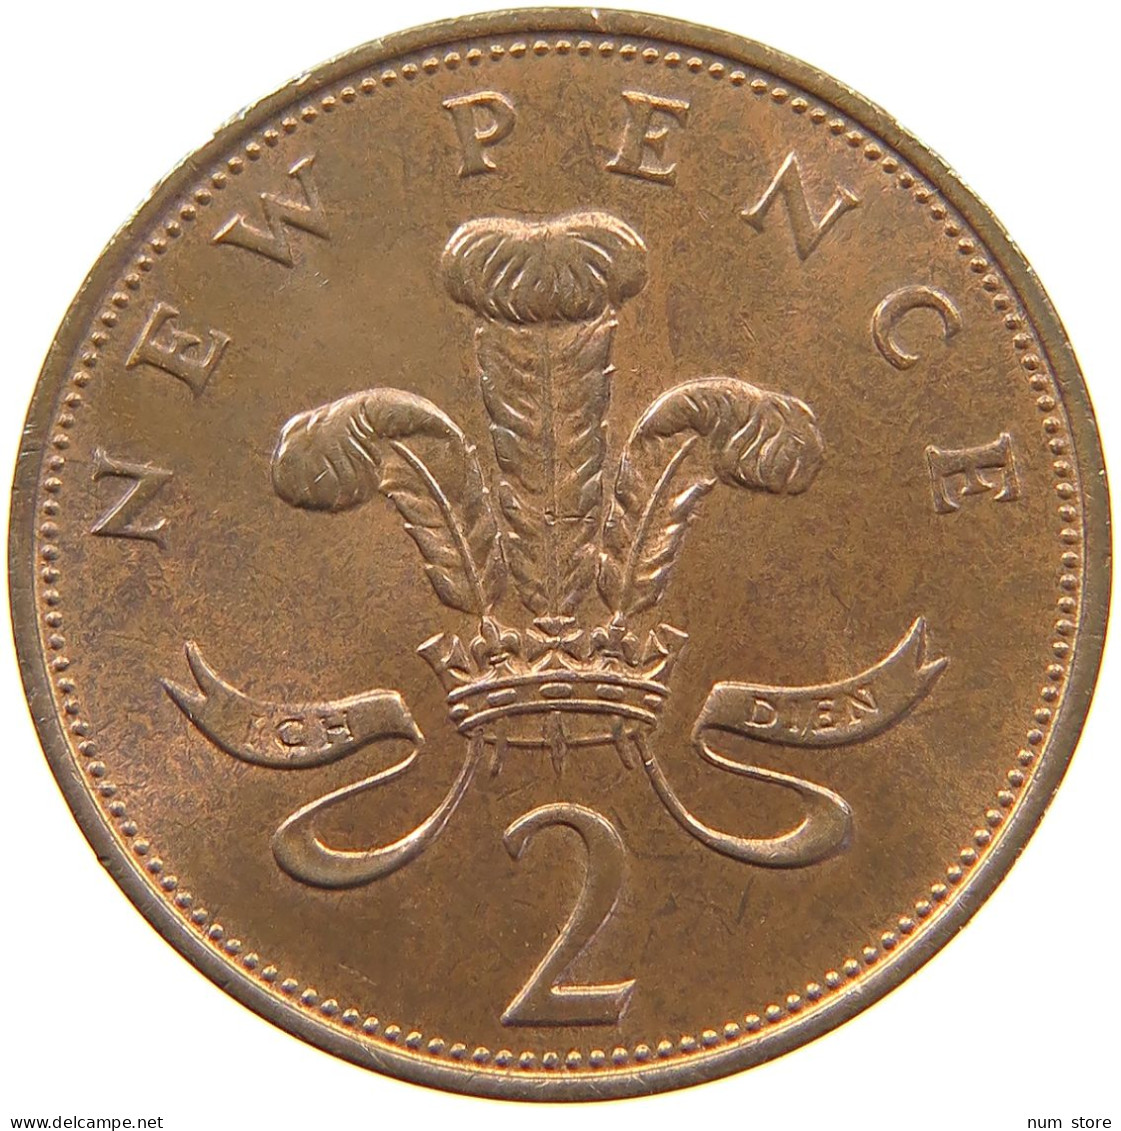 GREAT BRITAIN 2 PENCE 1971 Elisabeth II. (1952-) #s060 0745 - E. 2 Pence